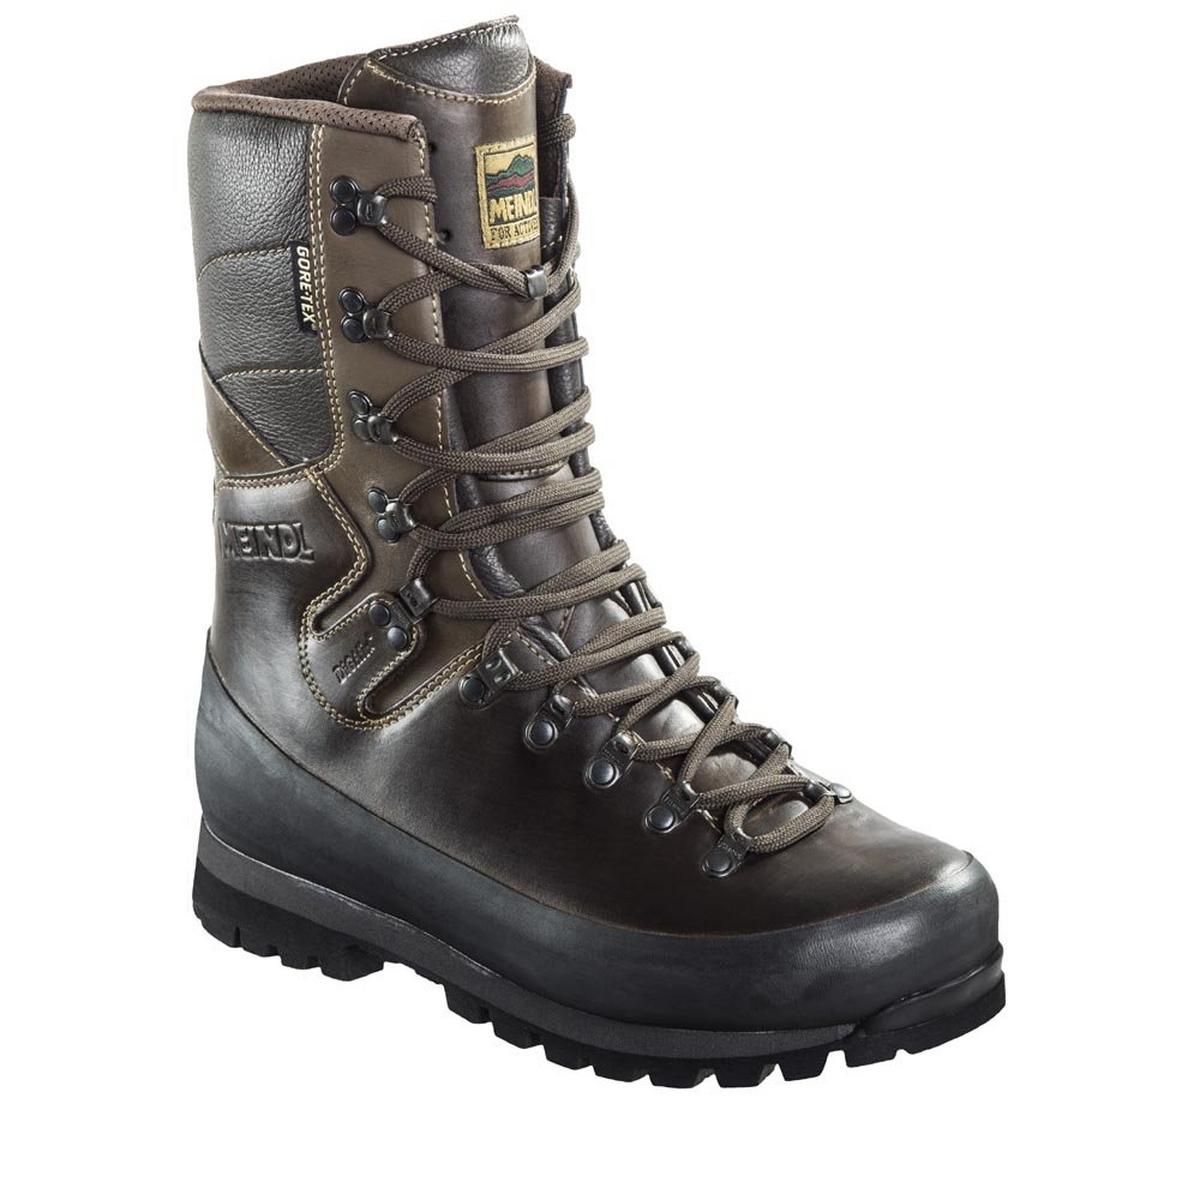 Meindl Men's Dovre Extreme MFS Gore-Tex Walking Boots - Brown